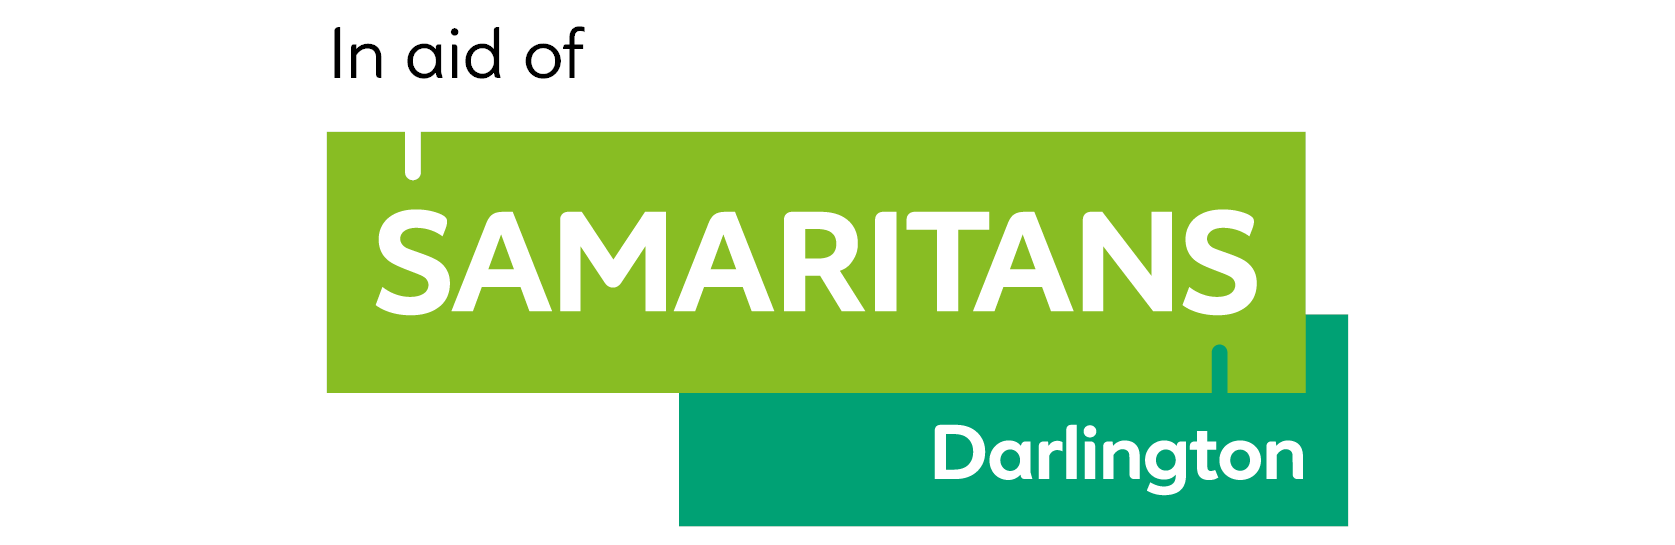 Darlington Samaritans